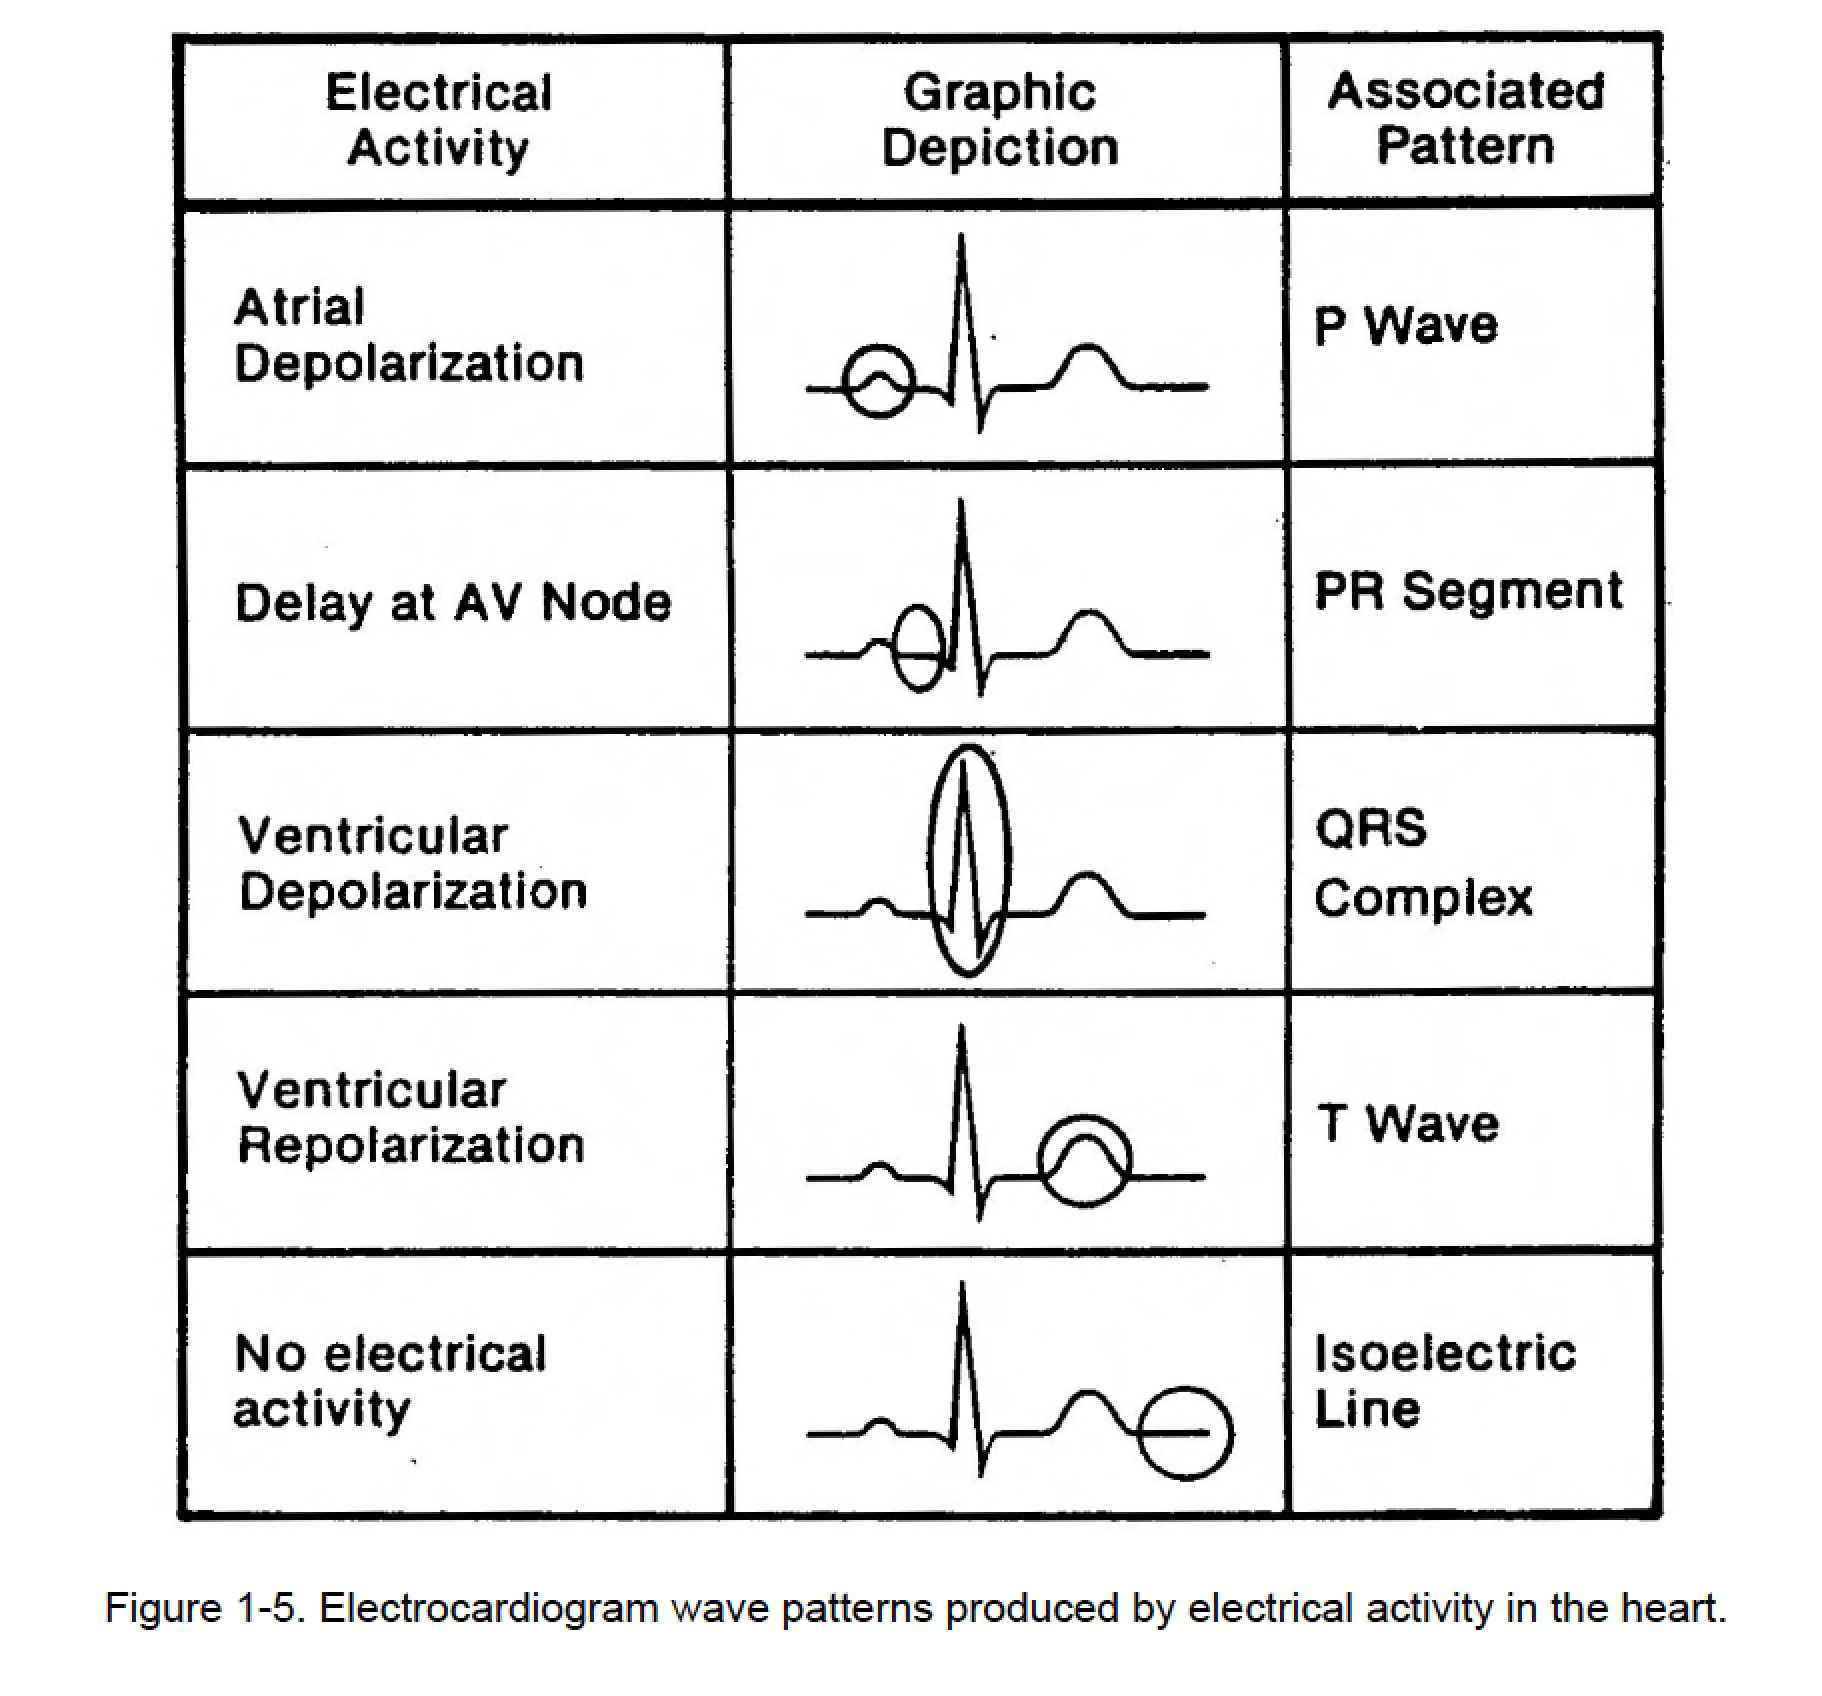 pulseless electrical activity on ecg